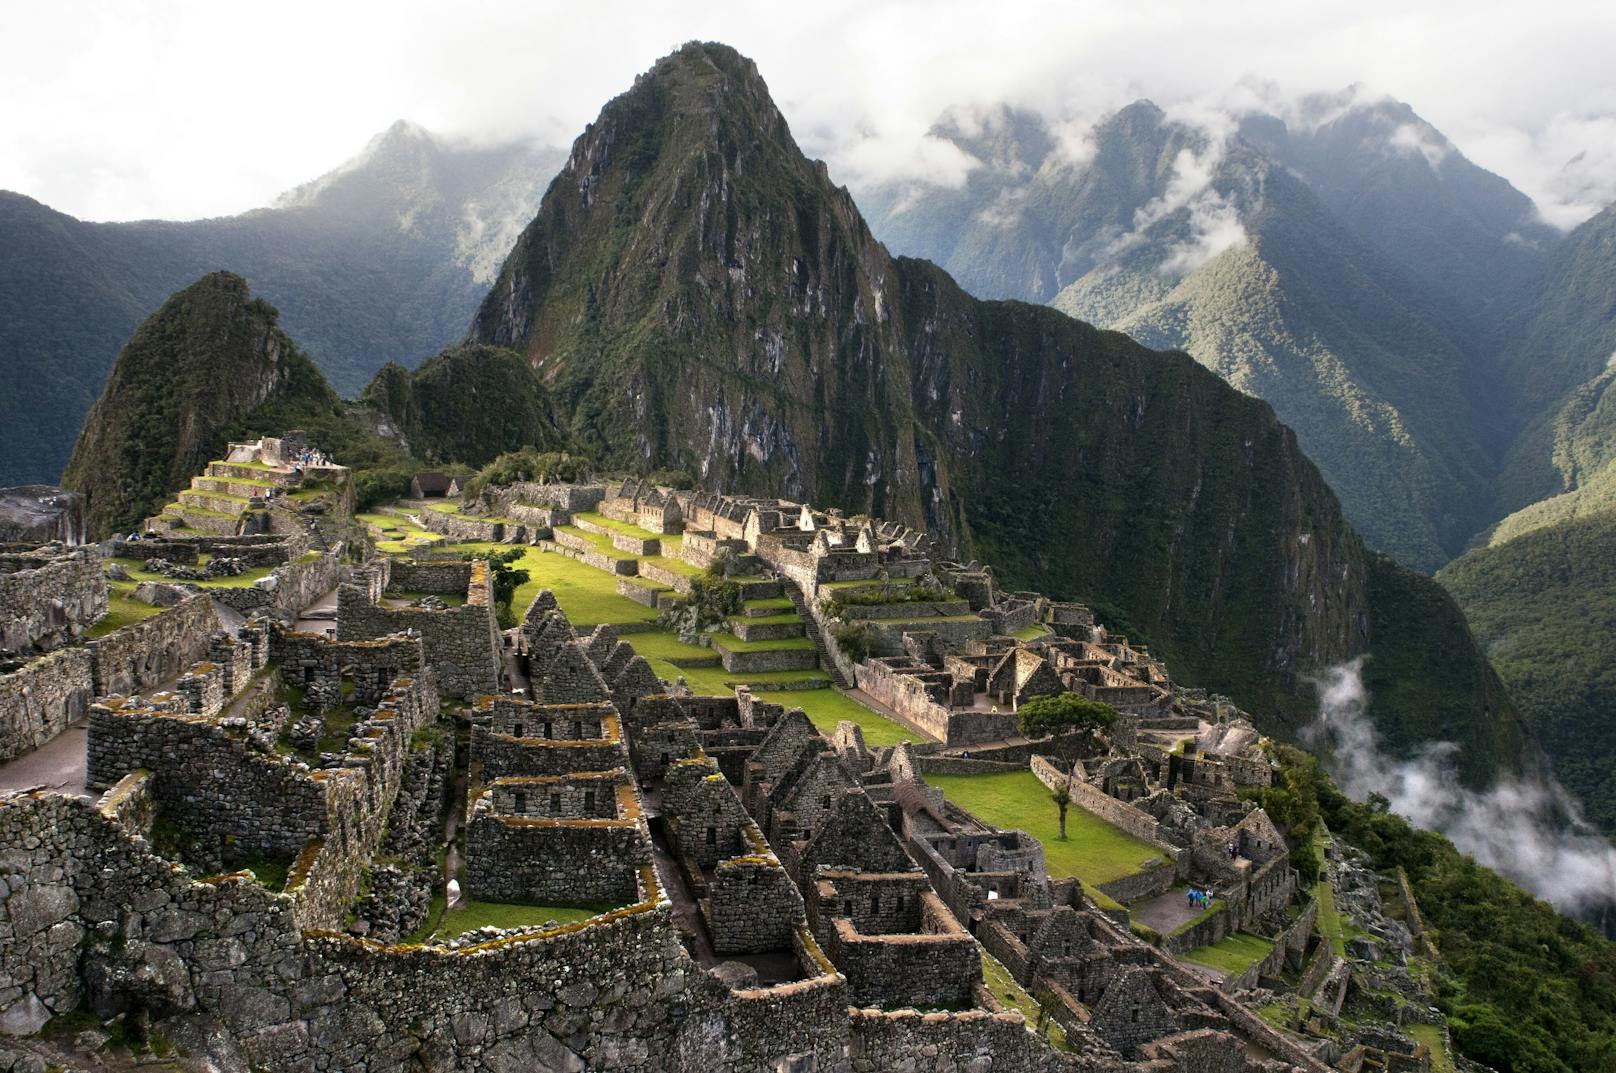 Die Ruinenstadt Machu Picchu in Peru liegt in  in 2430 Metern Höhe.